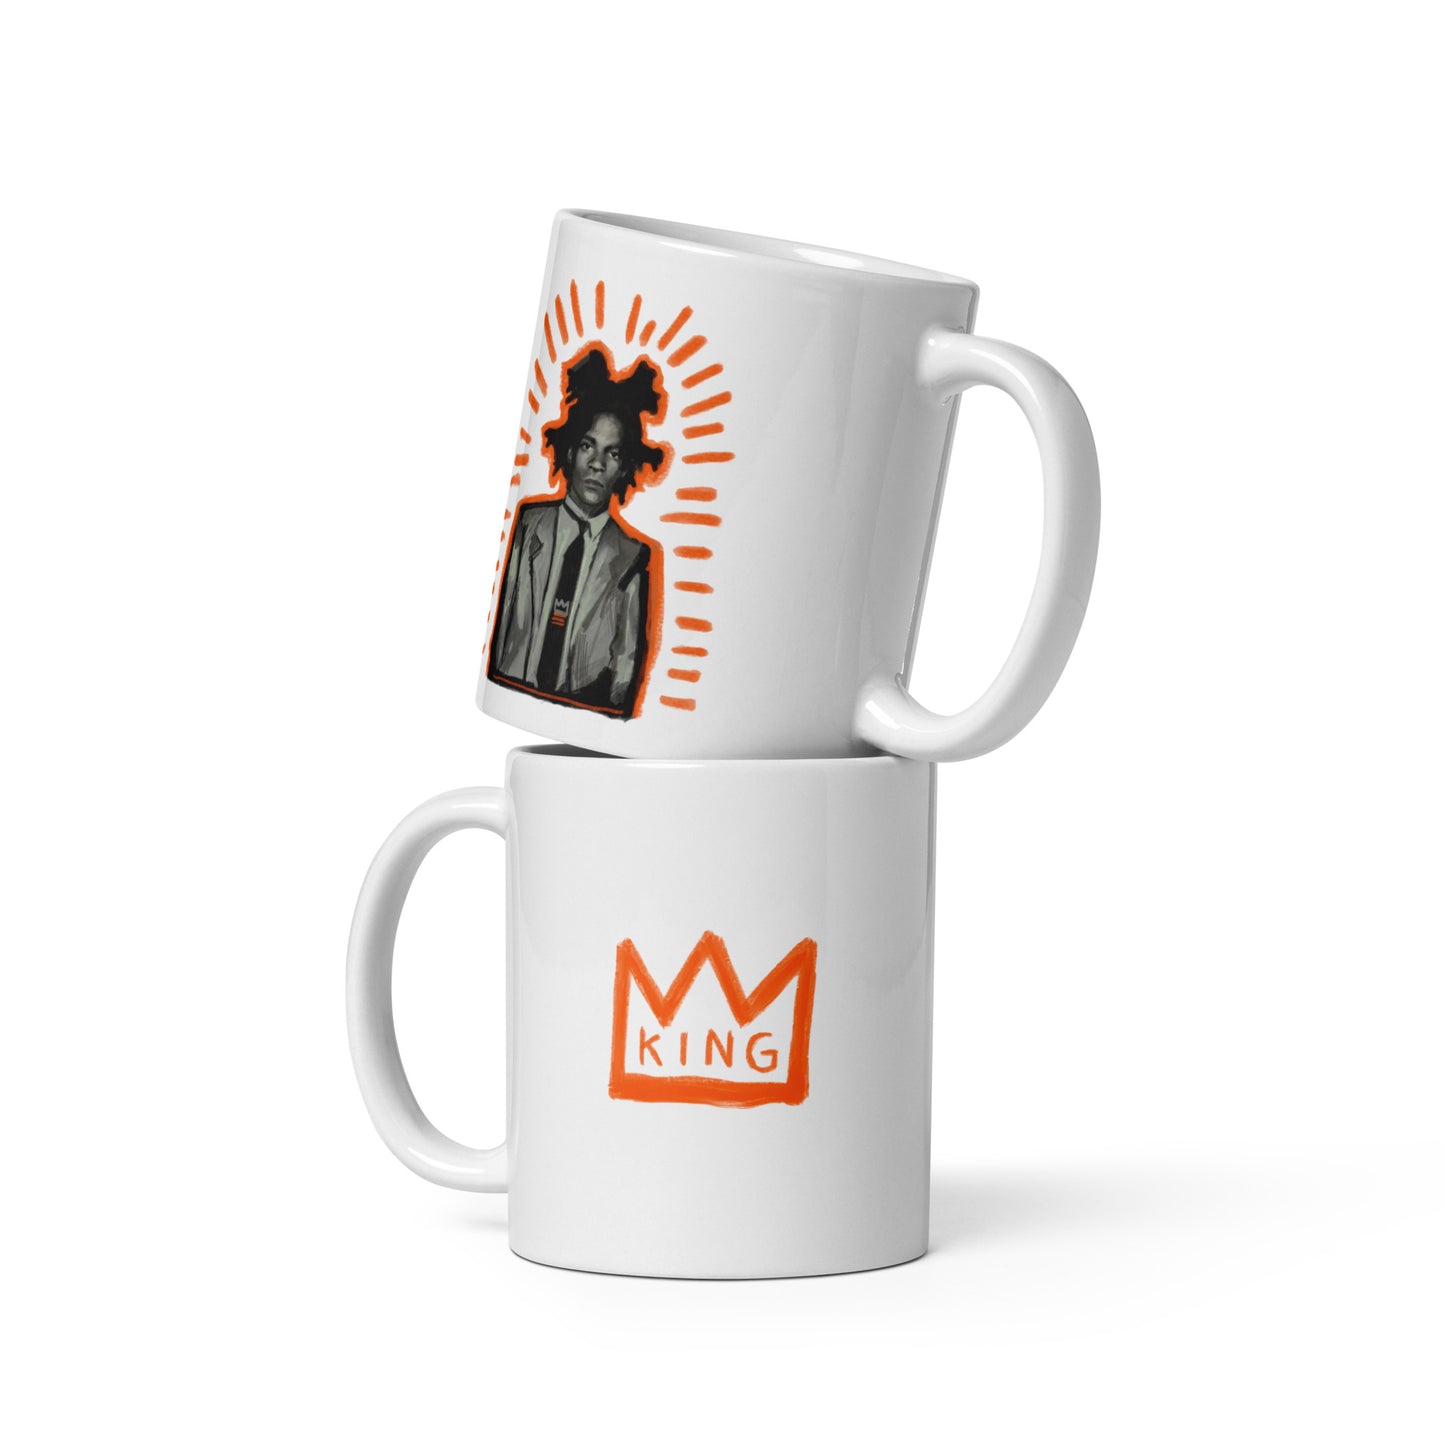 Basquiat coffee mug